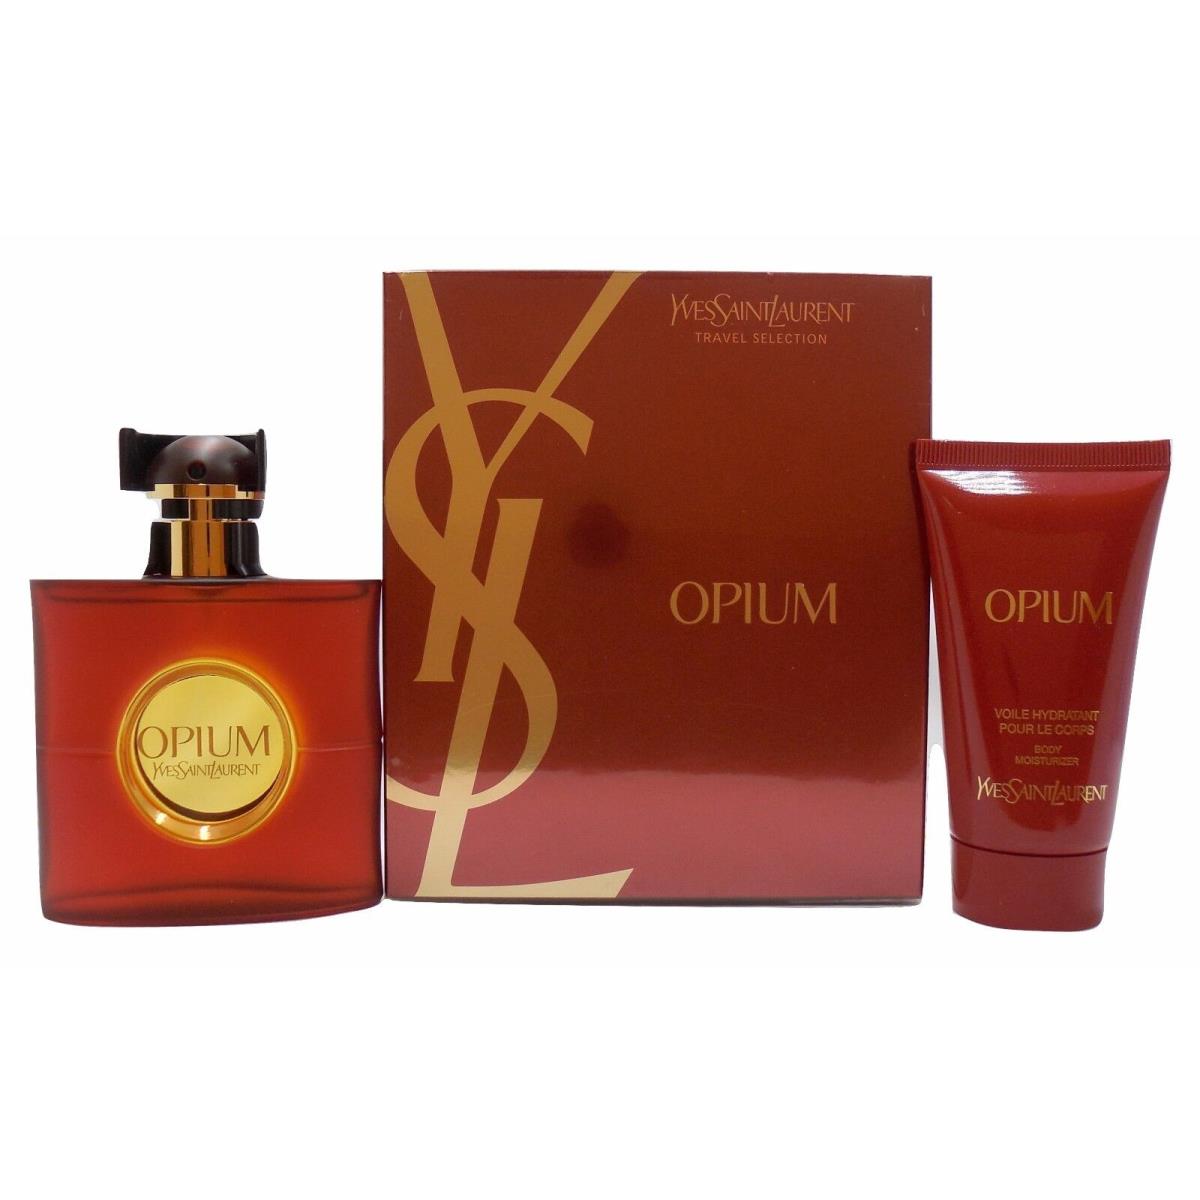 Yves Saint Laurent Opium Travel Selection Gift Set Eau DE Toilette Spray 50ML